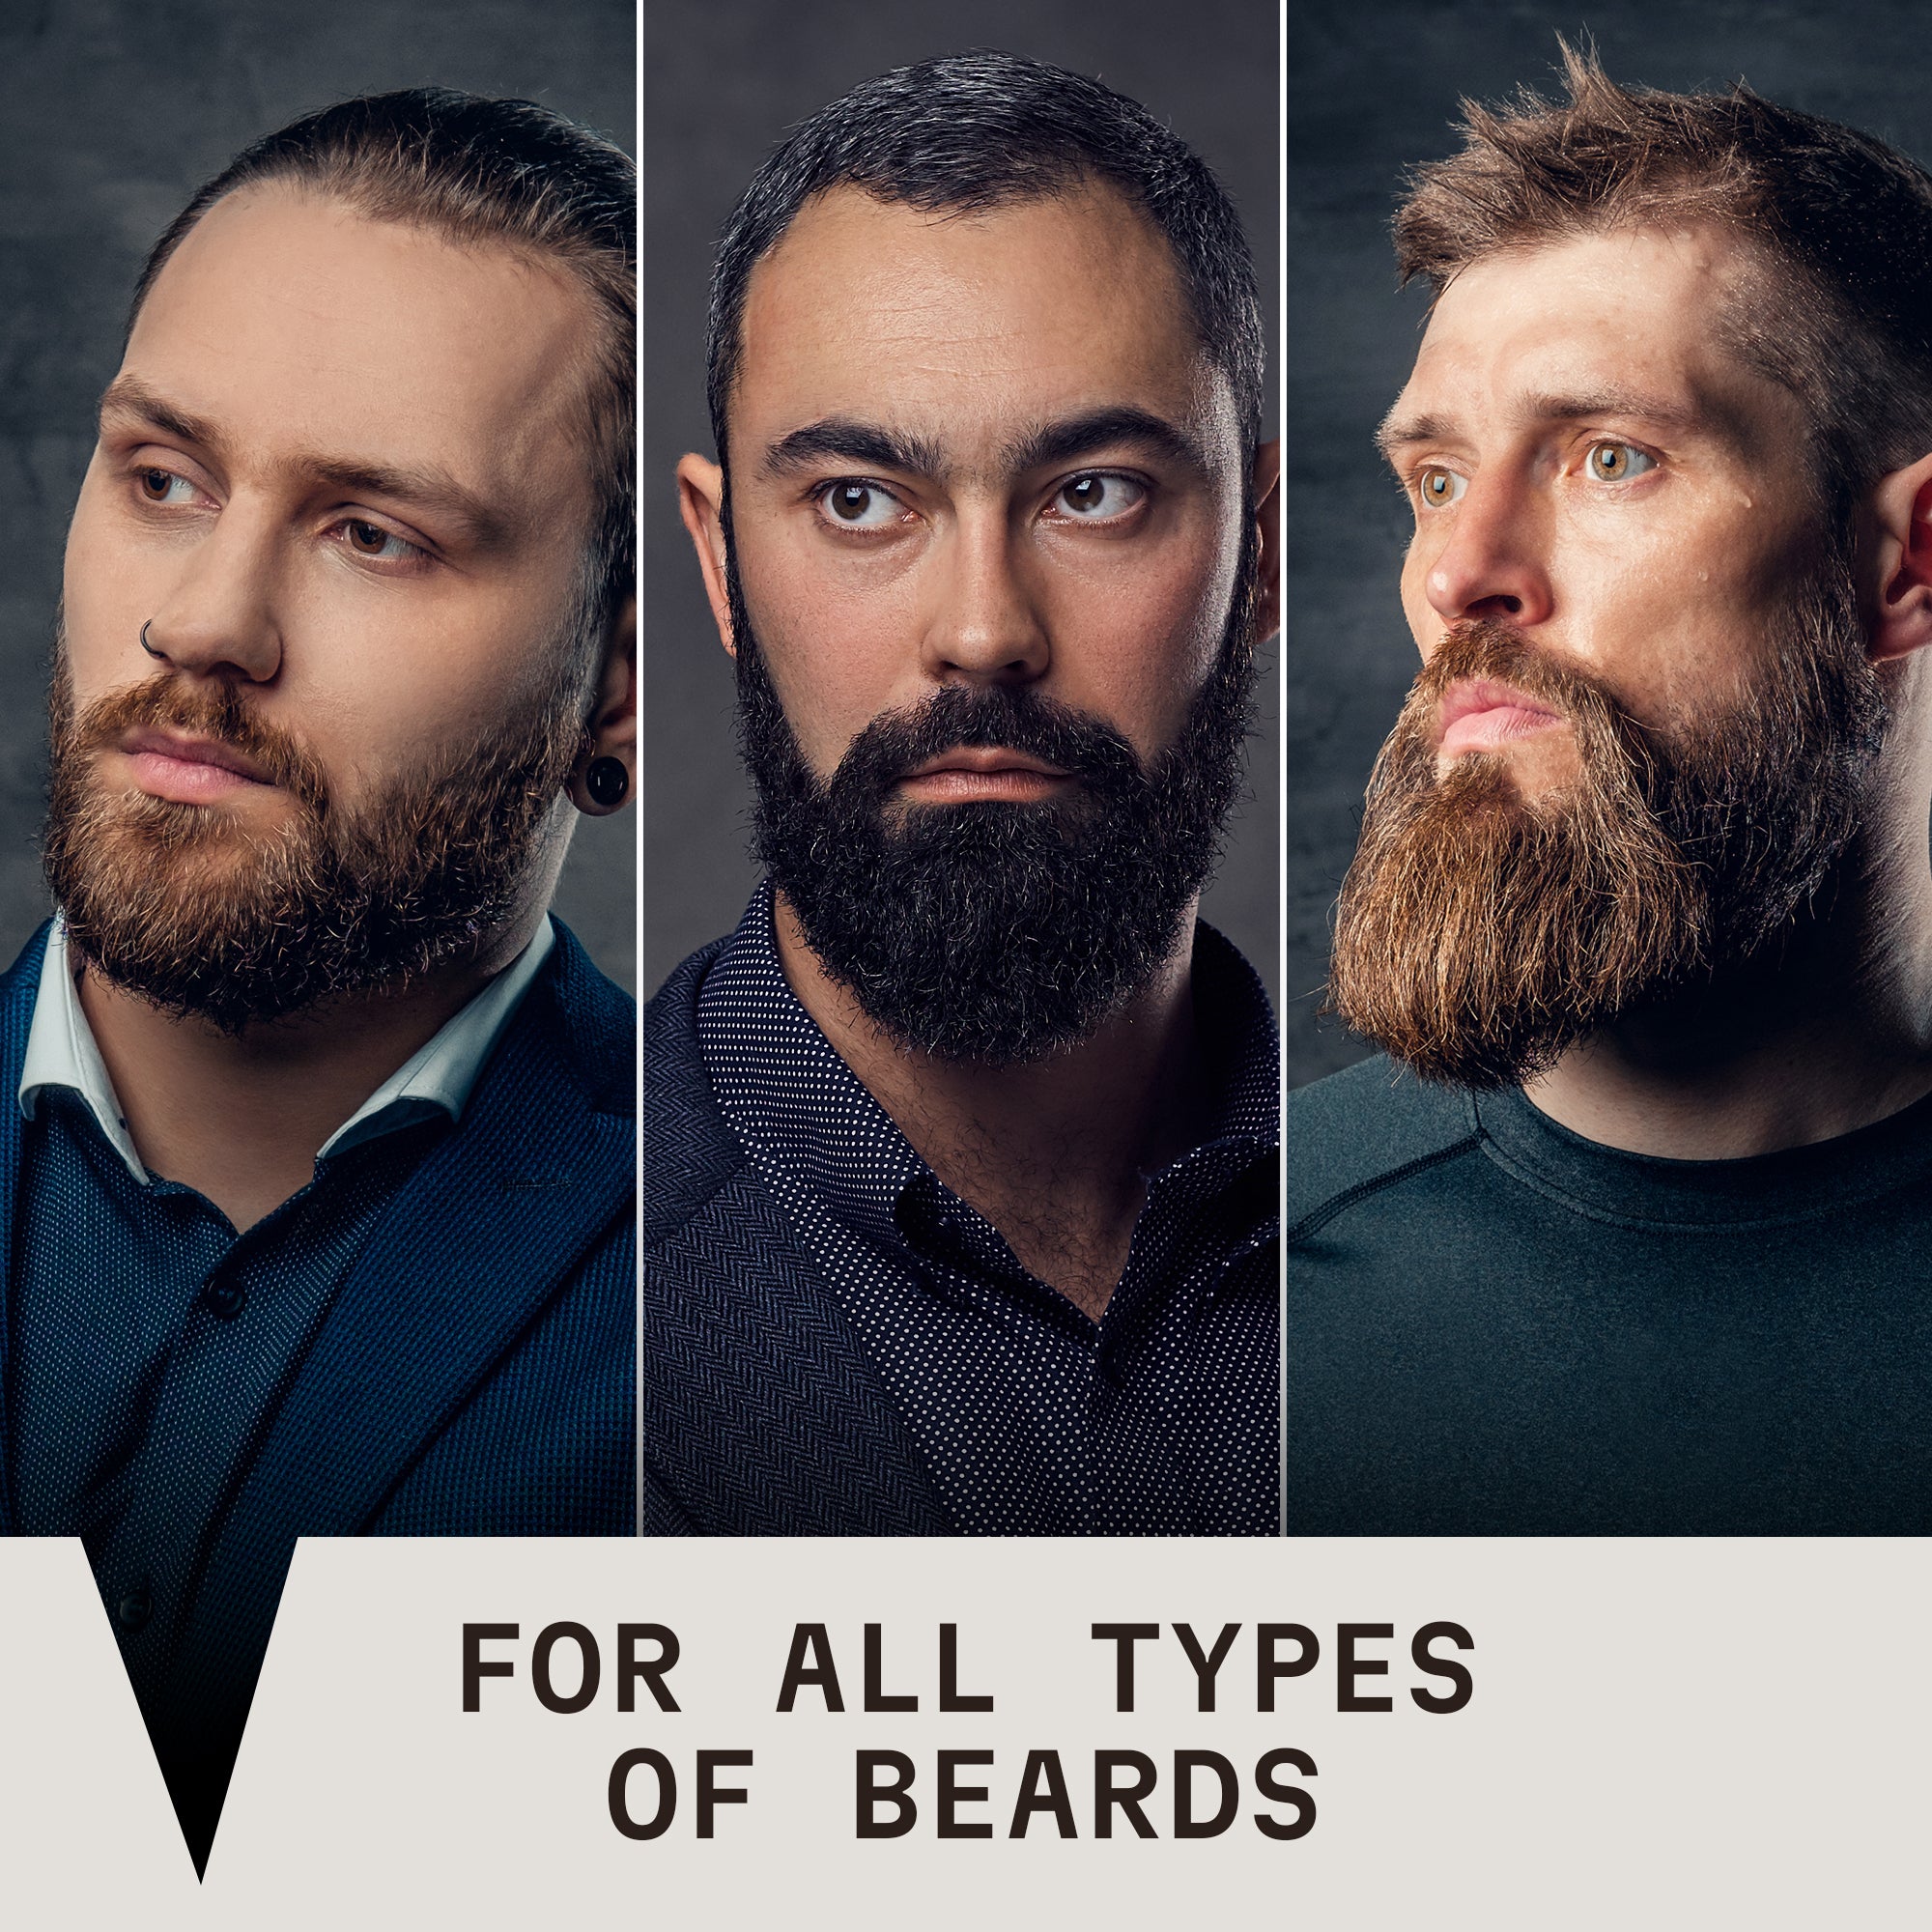 Beard Balm Variety (4 Pack)